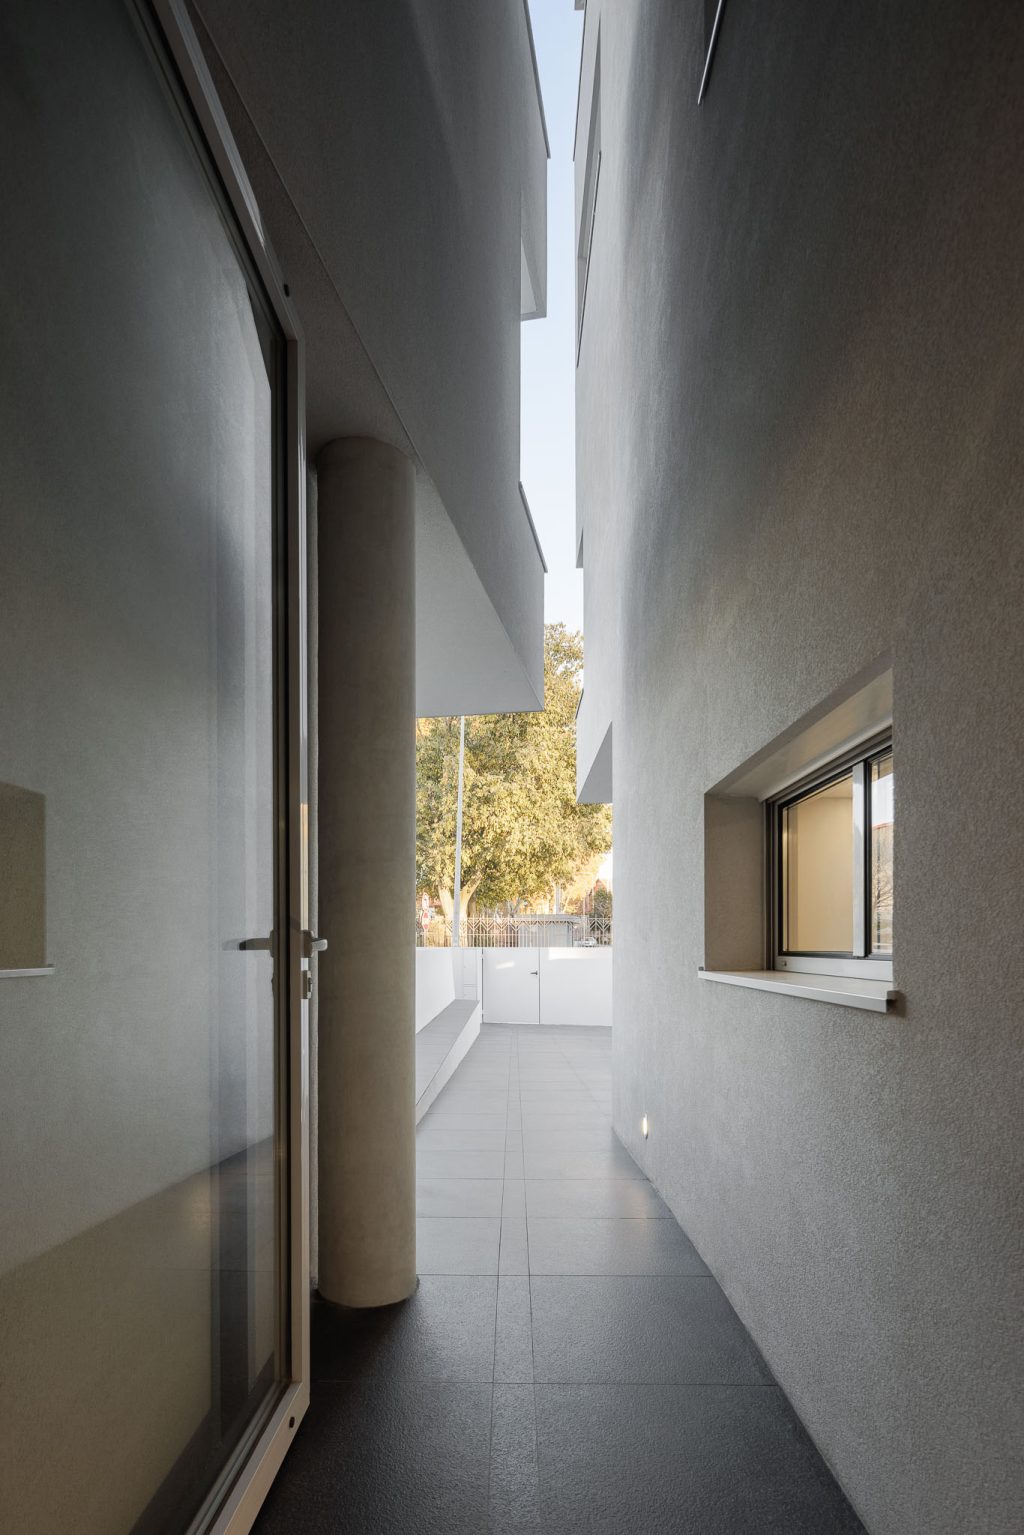 Nova Rio Housing contemporary architecture that challenges conventions. Antonio Paulo Marques